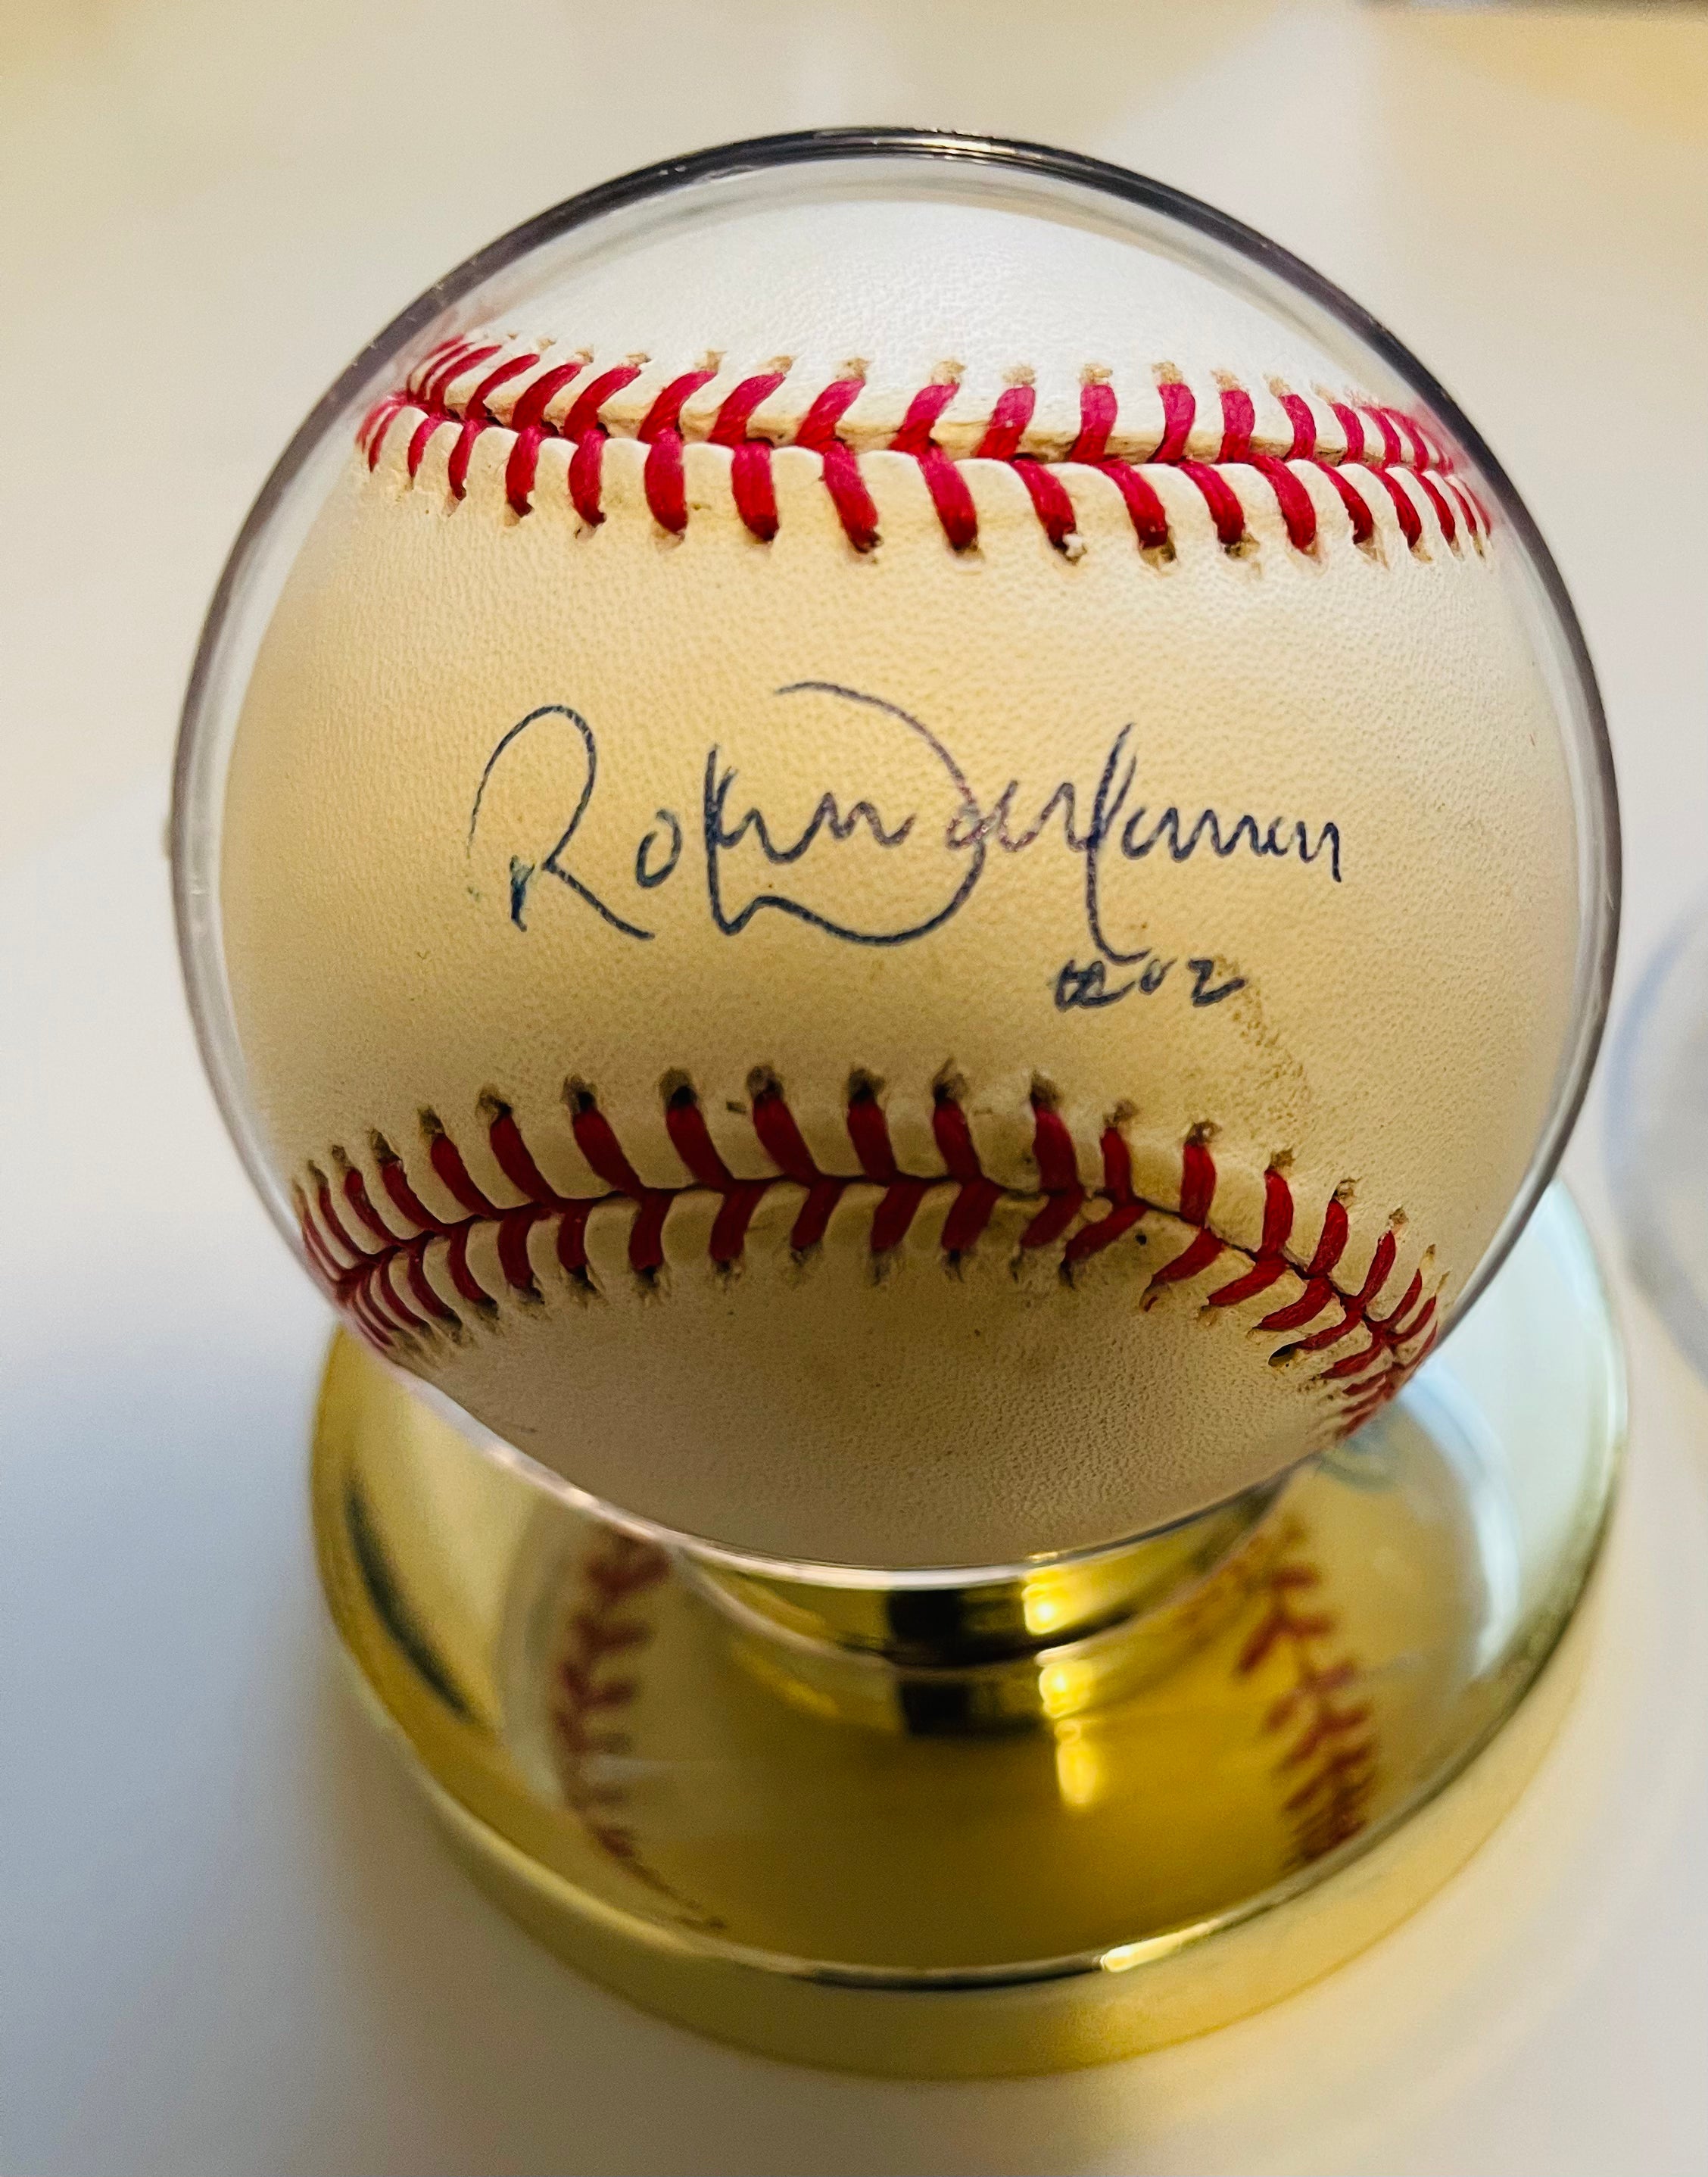 Roberto Alomar autographed baseball in holder with COA